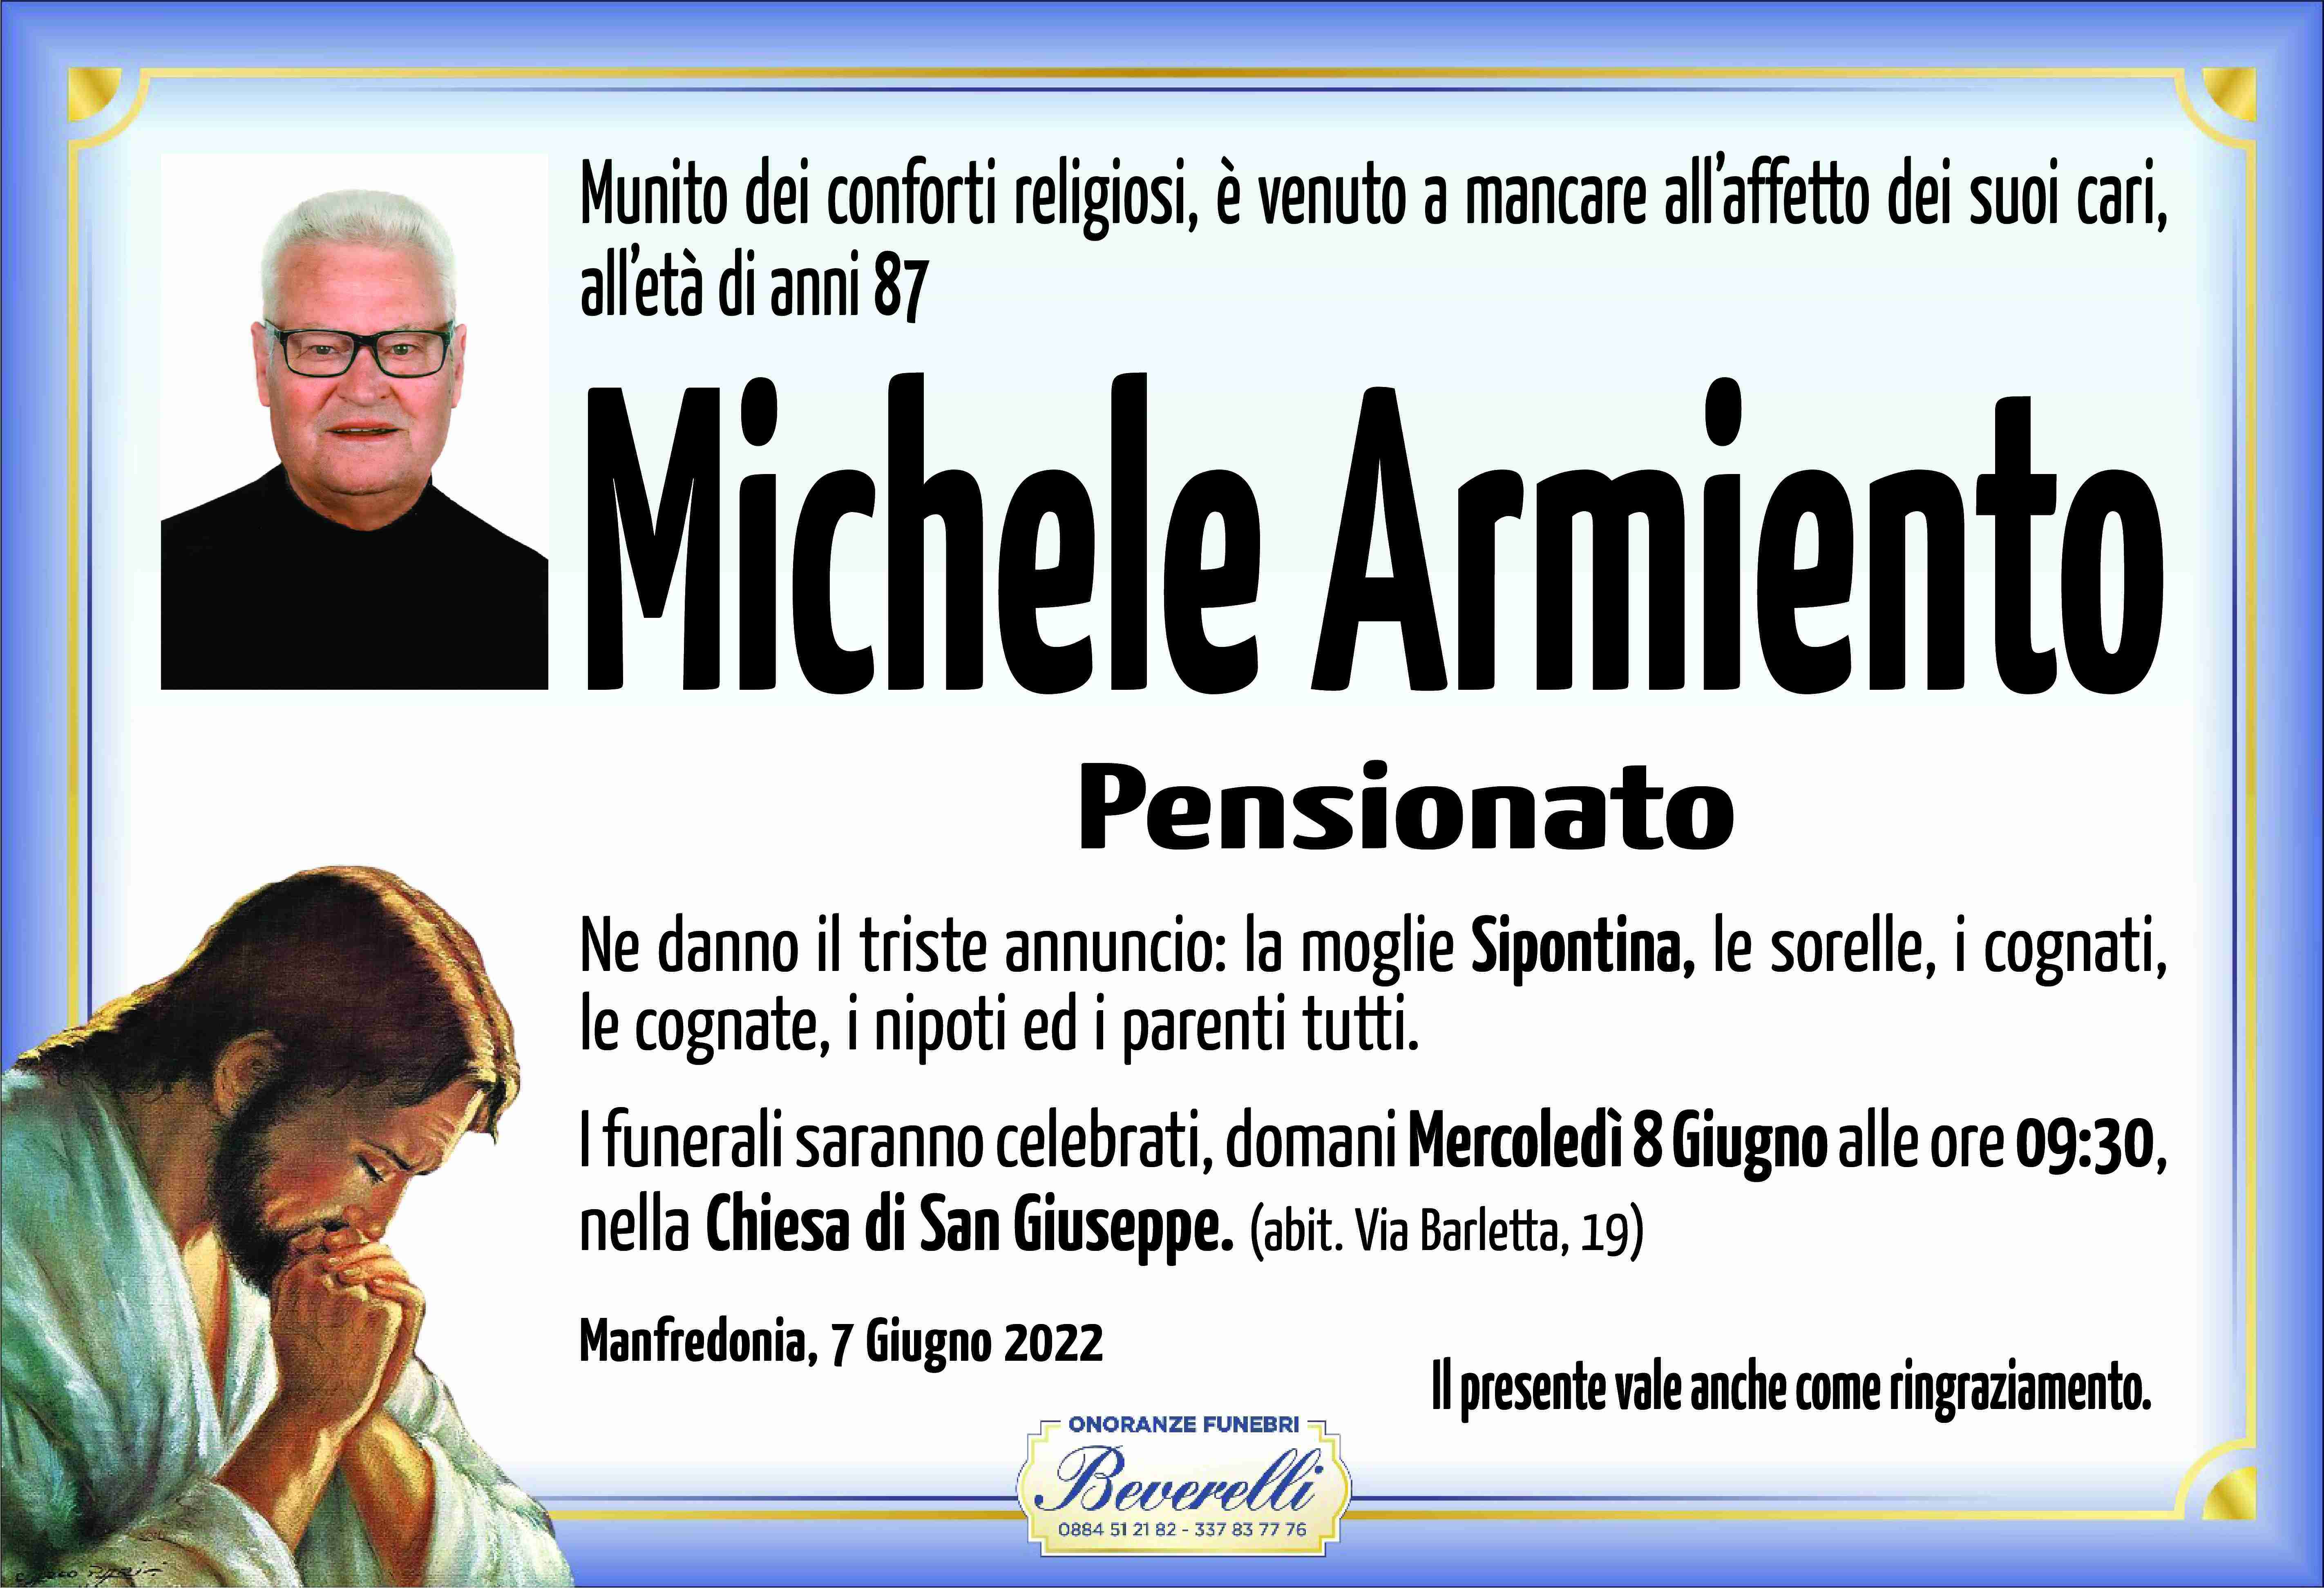 Michele Armiento